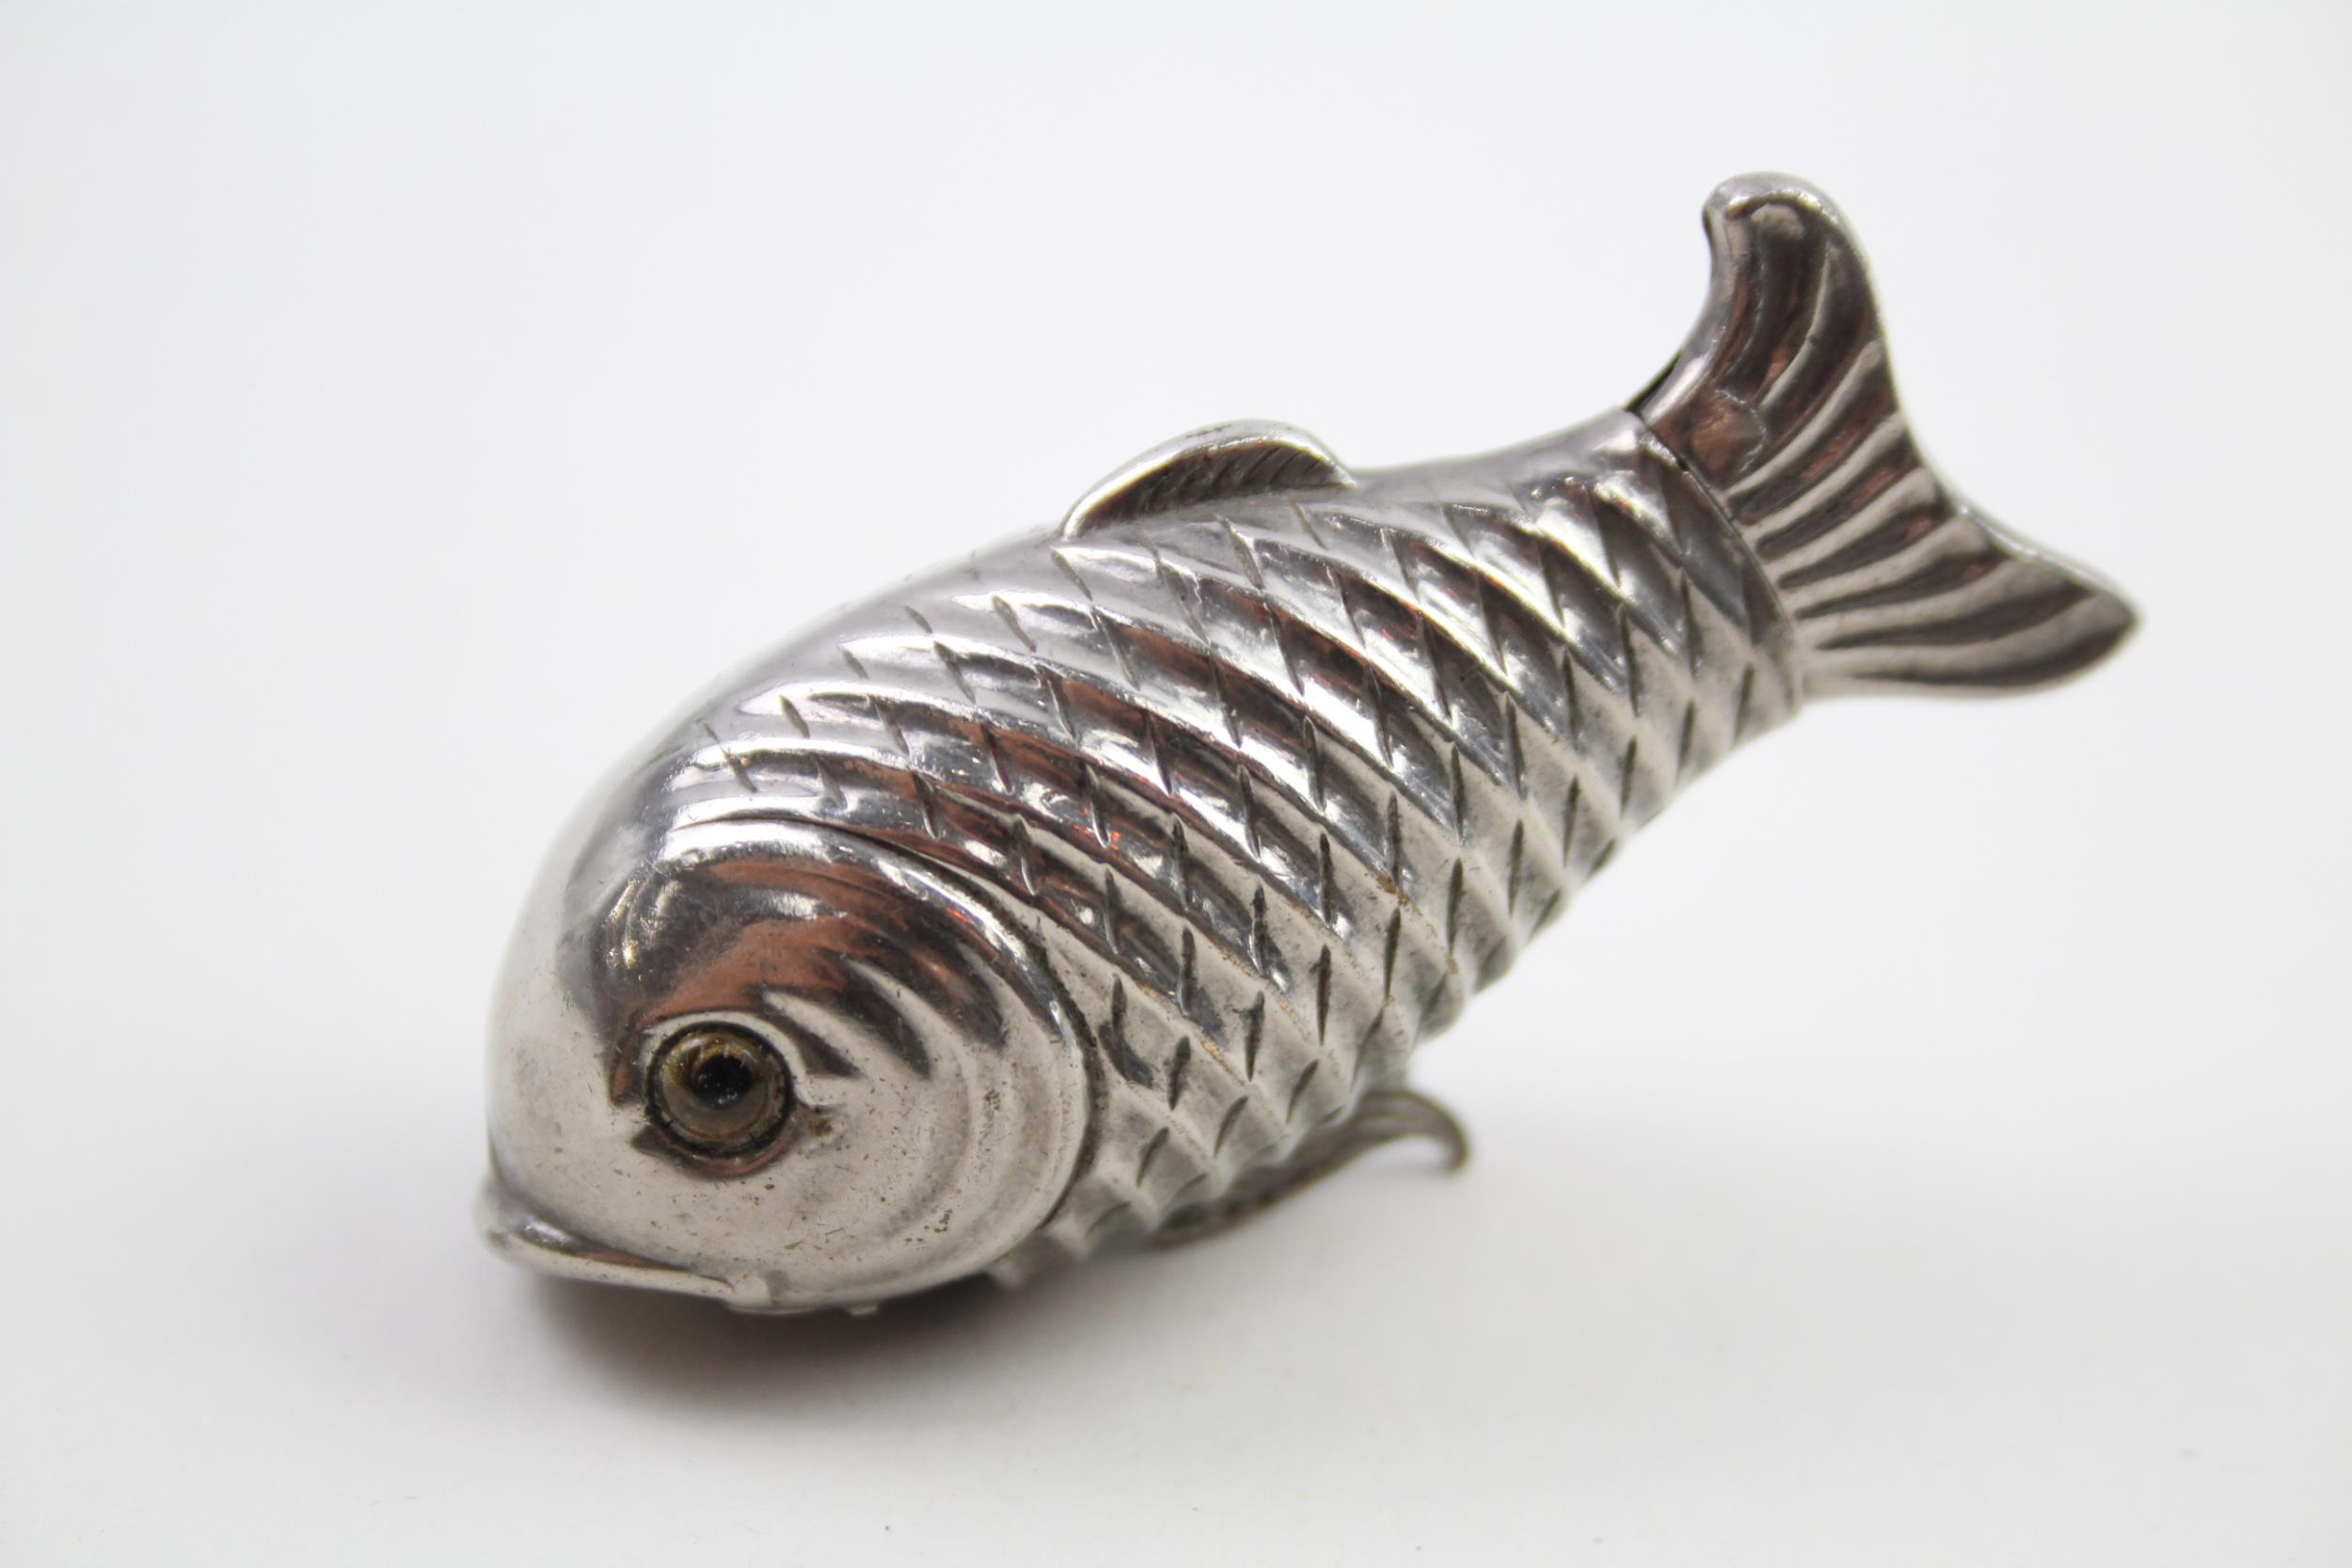 Antique / Vintage Base-Metal Novelty Fish Form Haberdashery Tape Measure - Diameter - 7.2cm In